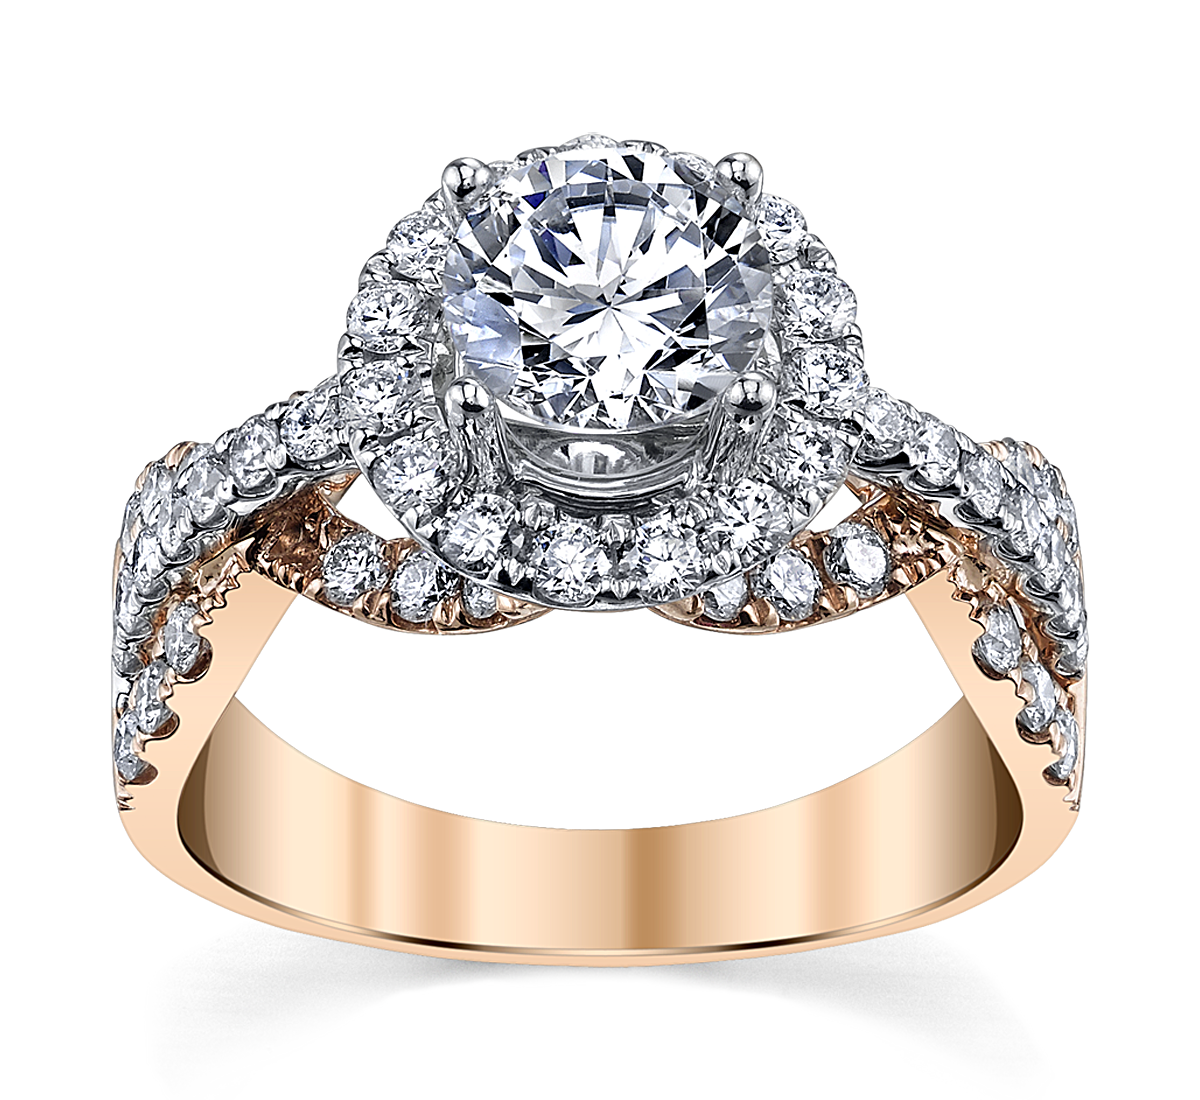 14K Two Tone Diamond Engagement Ring Setting